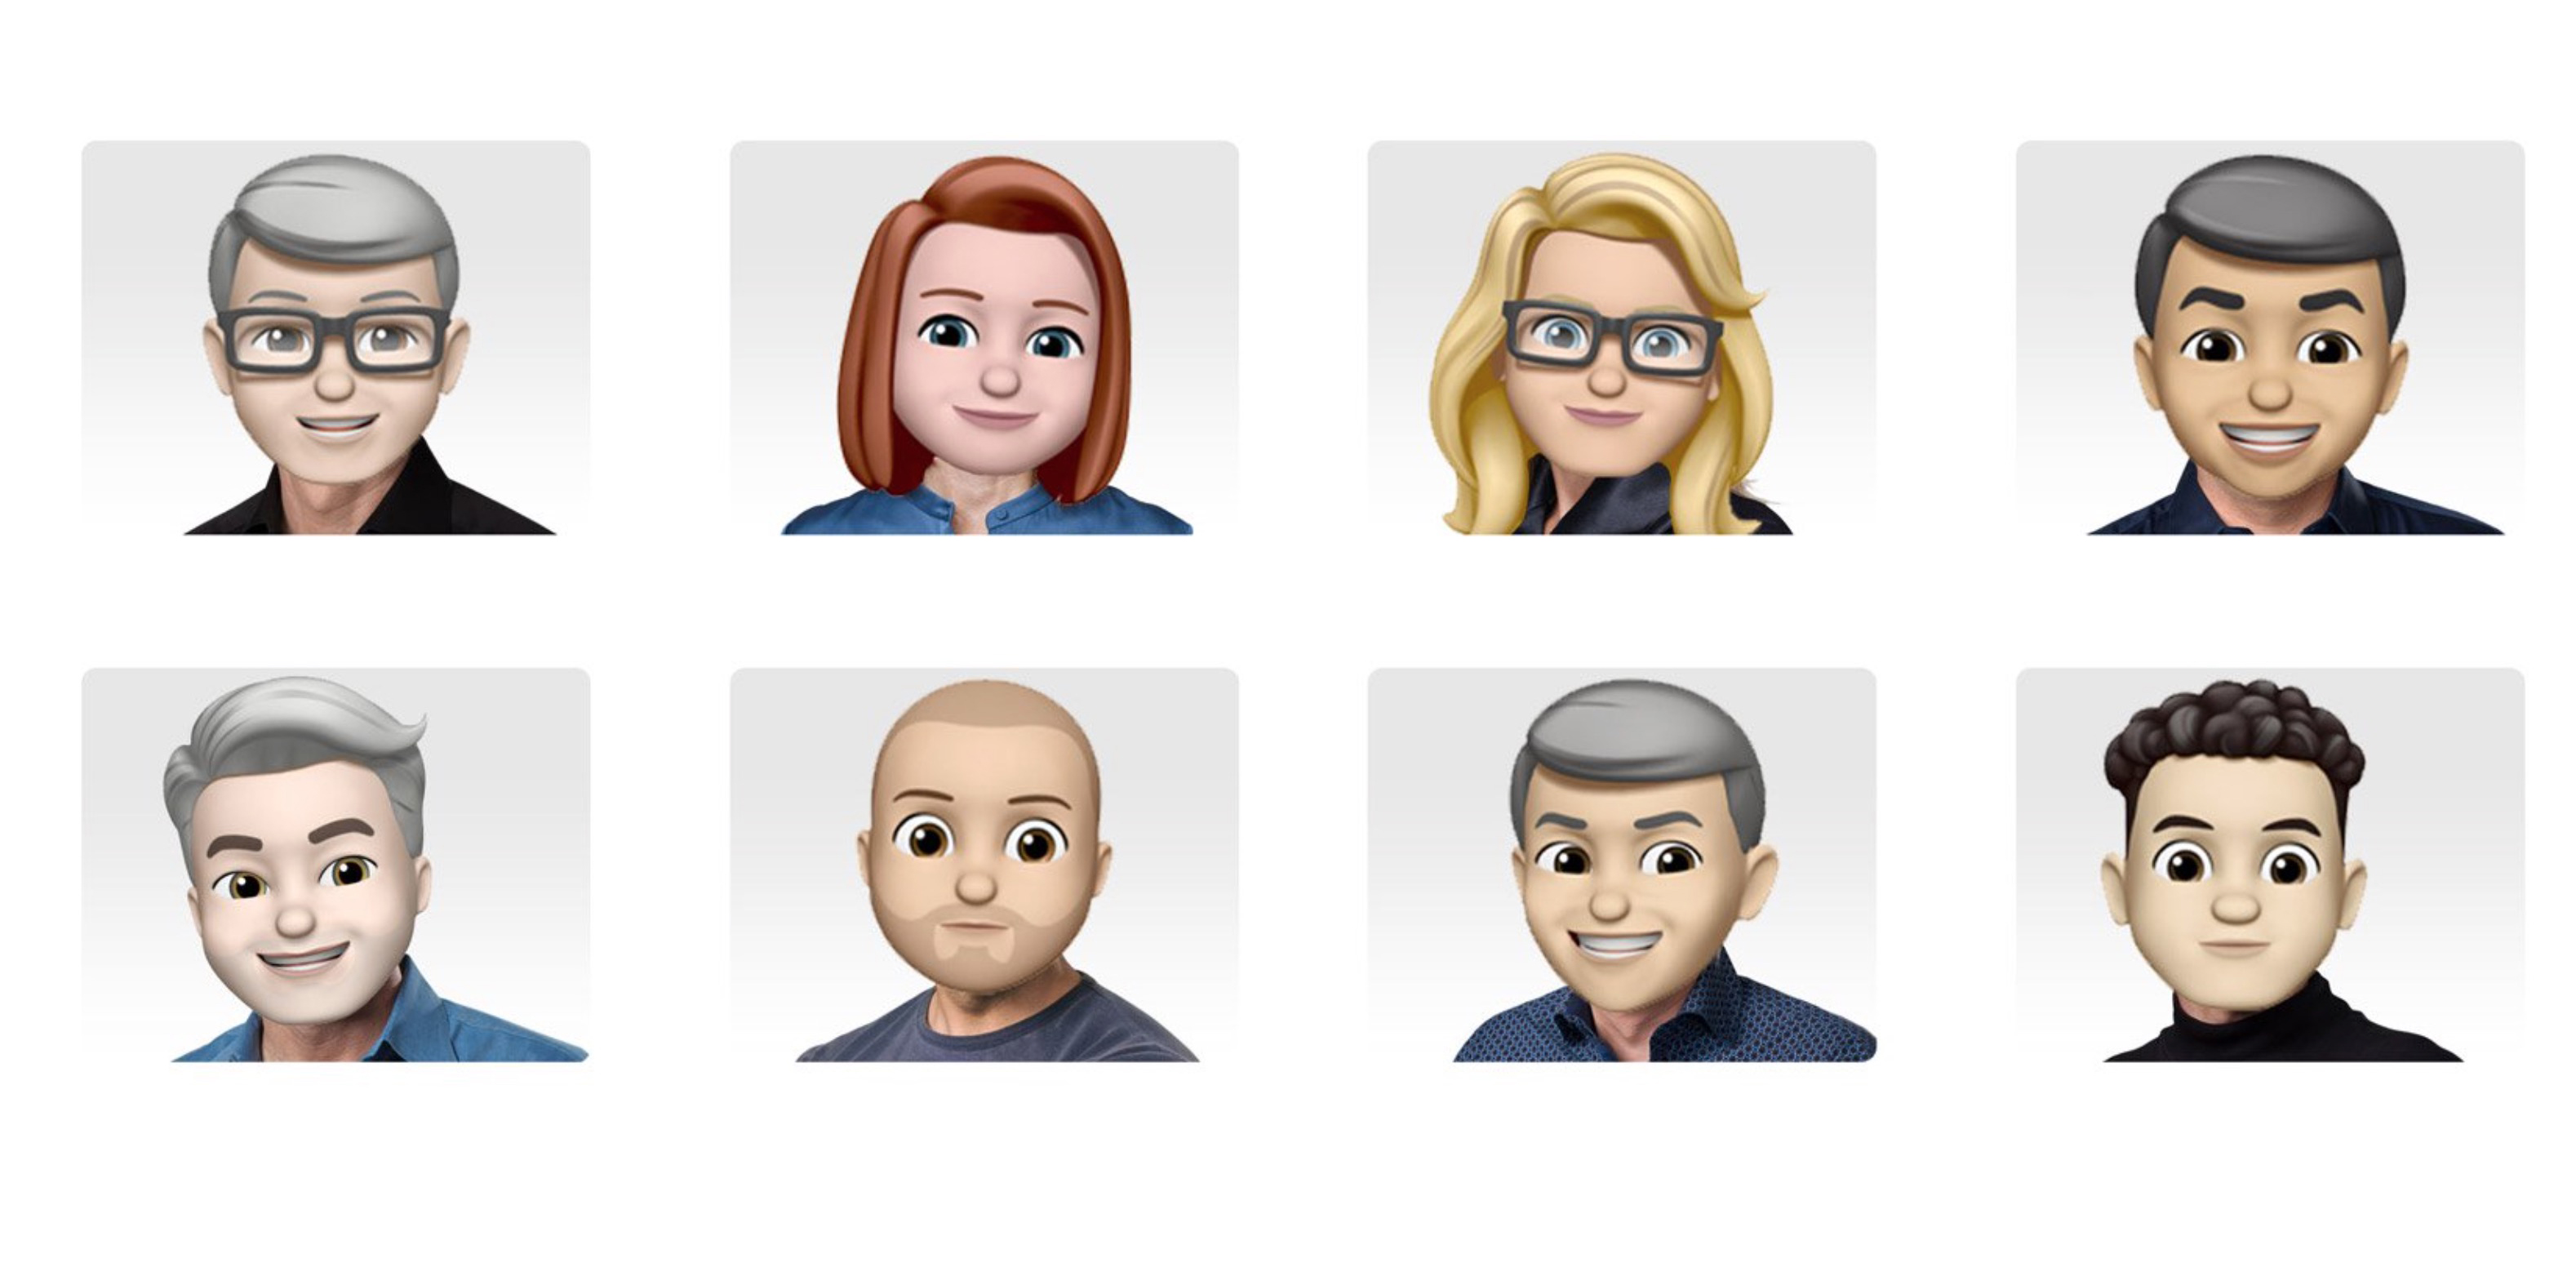 Apple released a set of senior management emojis to mark World Emoji Day